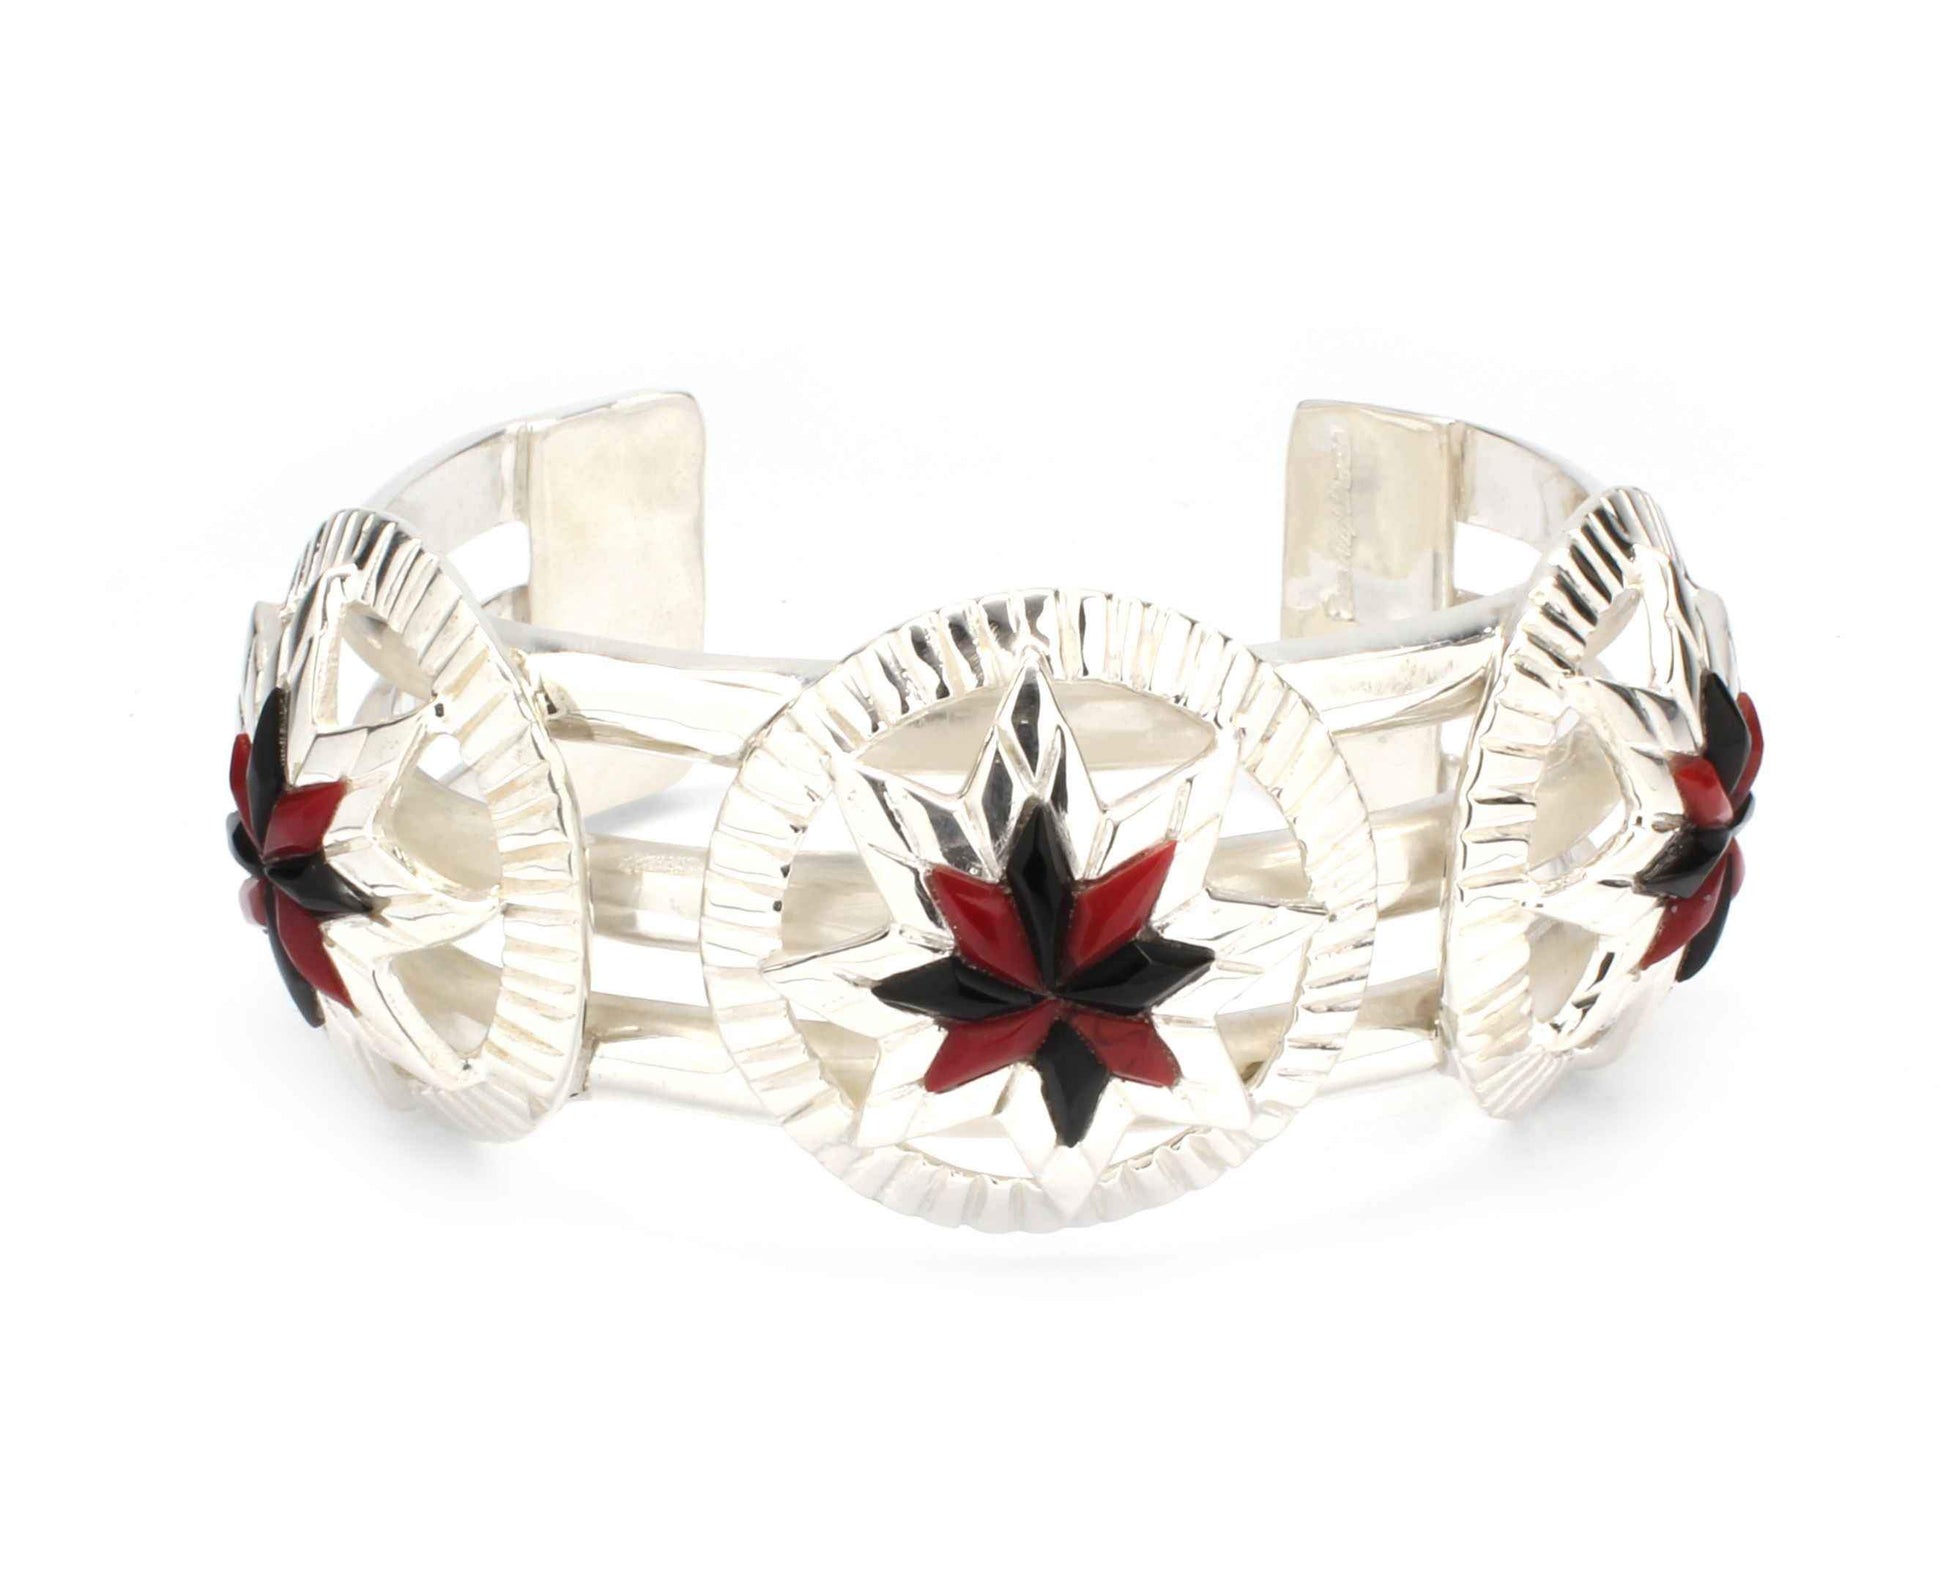 Ben Nighthorse-Three Bar Lakota Sioux Cuff Bracelet-Sorrel Sky Gallery-Jewelry